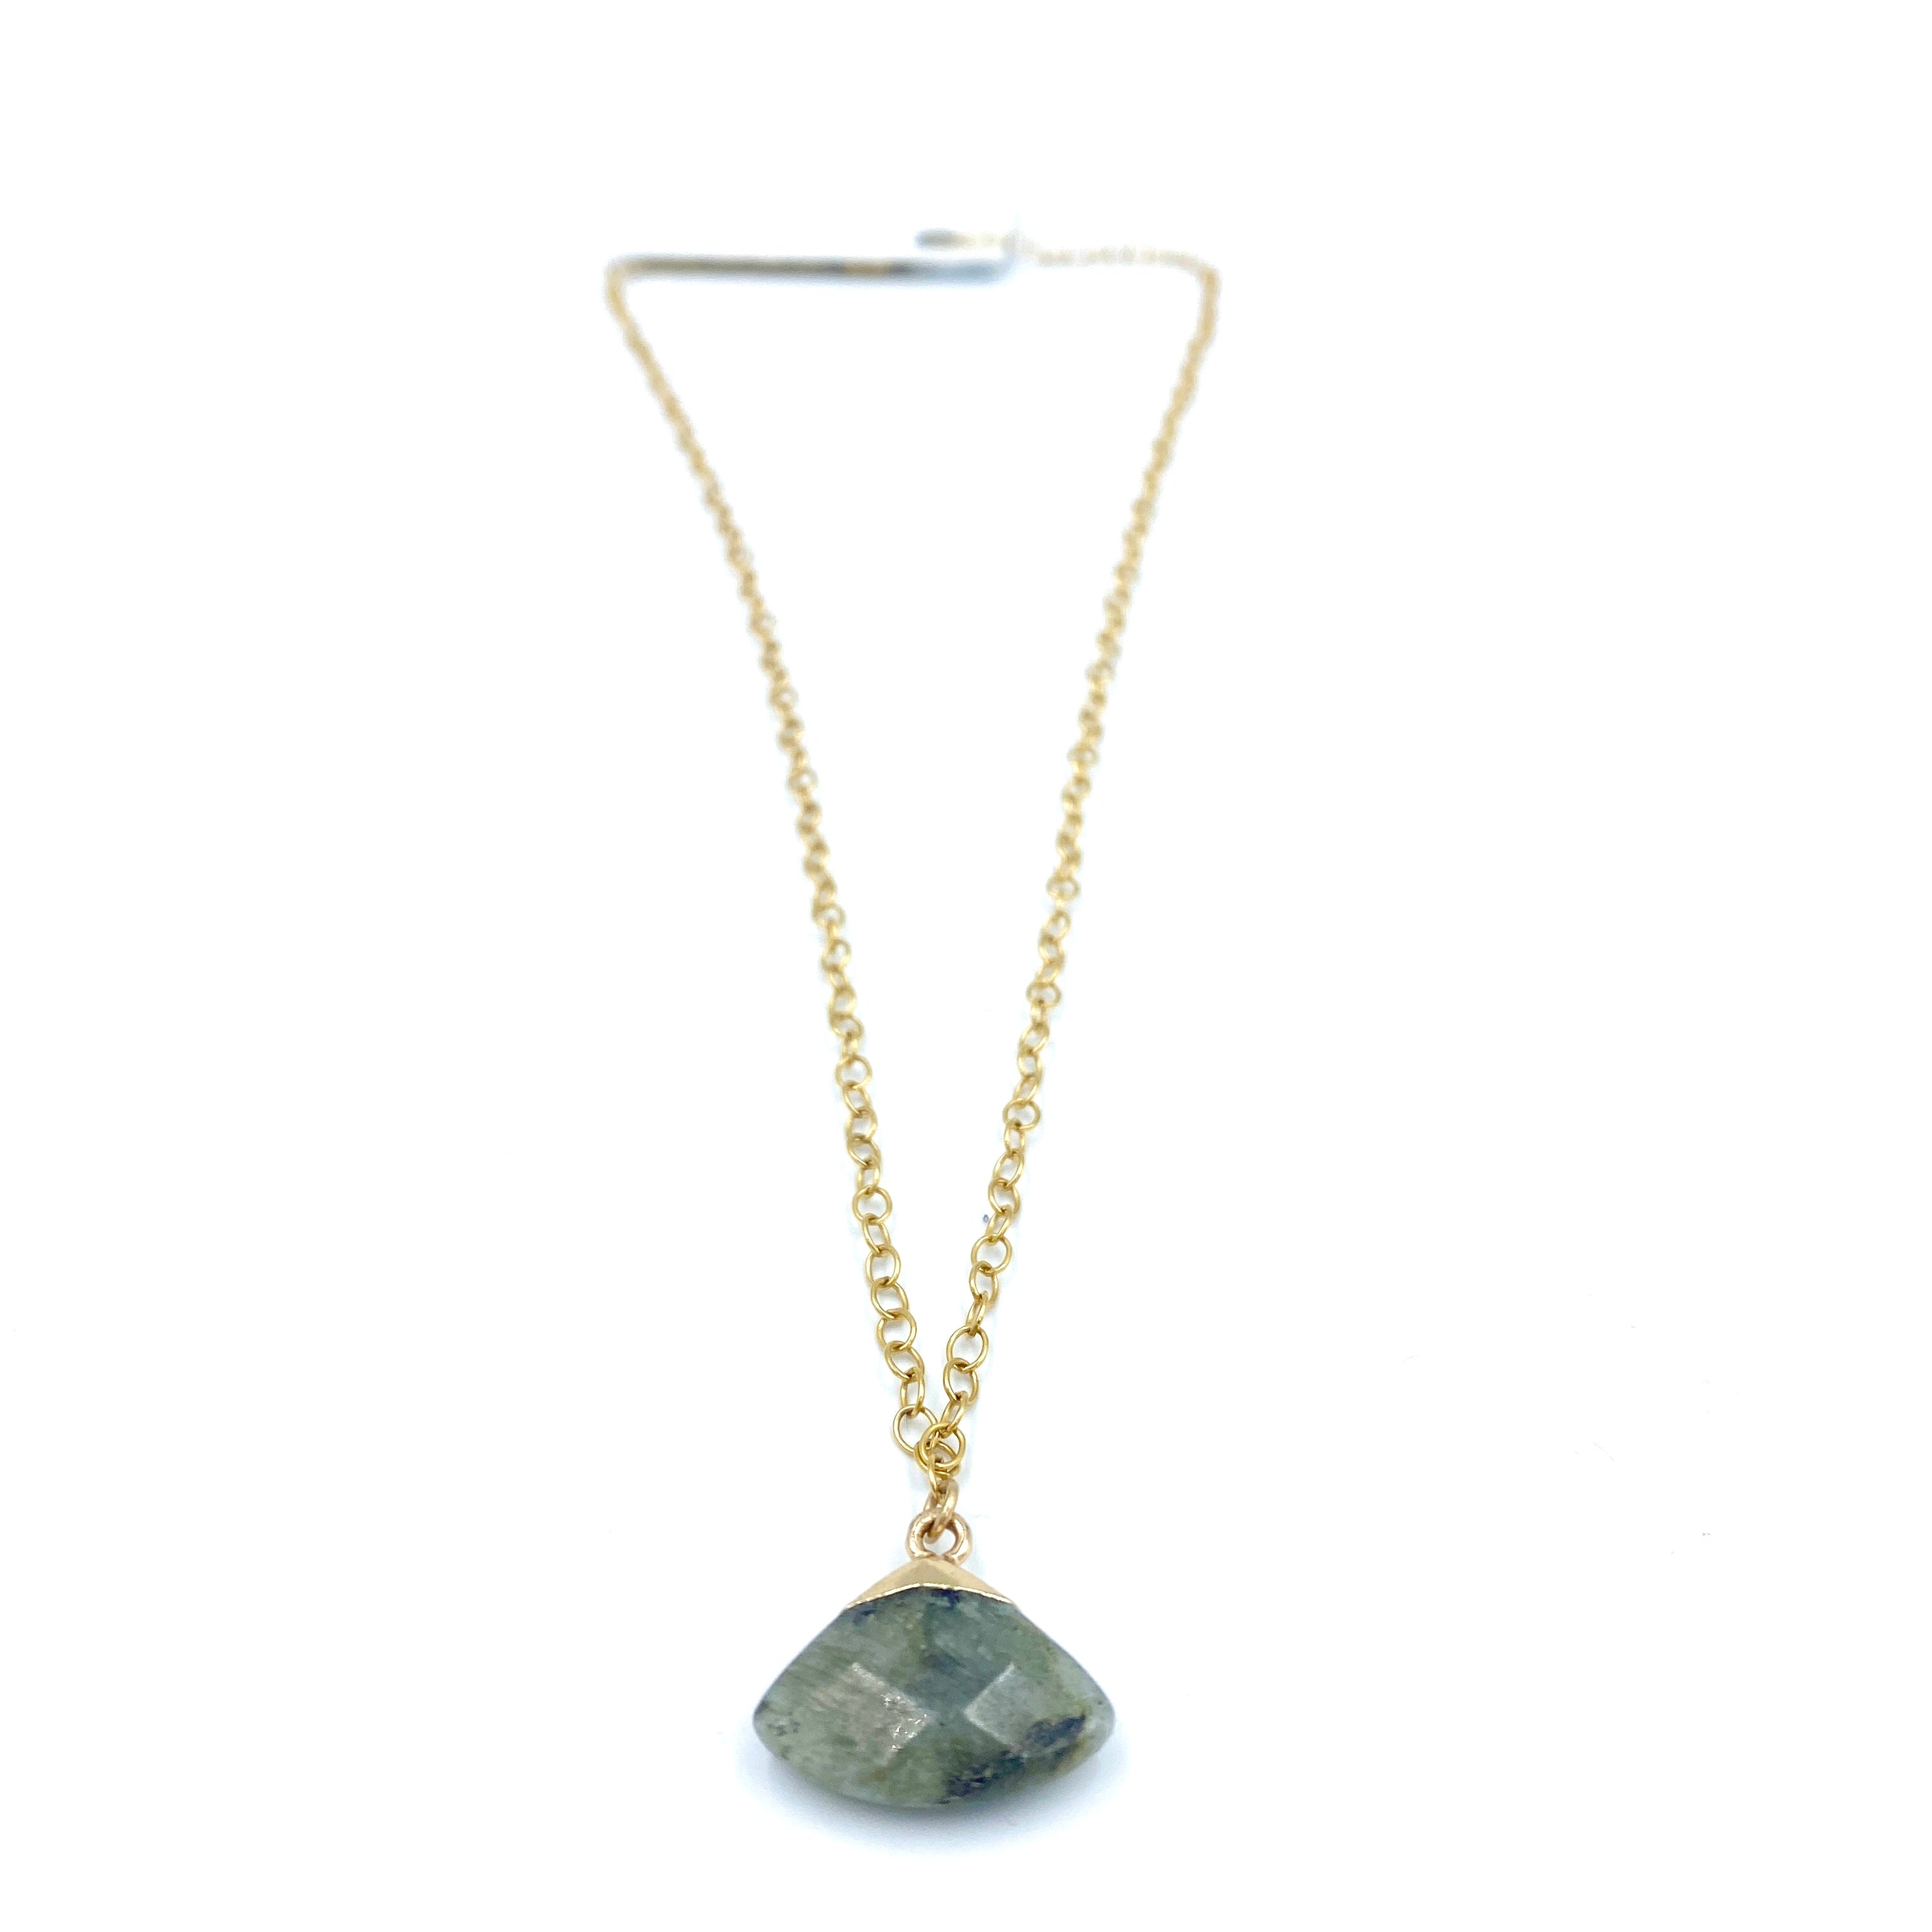 Joanna Bisley Labradorite Large 14kt Goldfill Chain 18 inch necklace